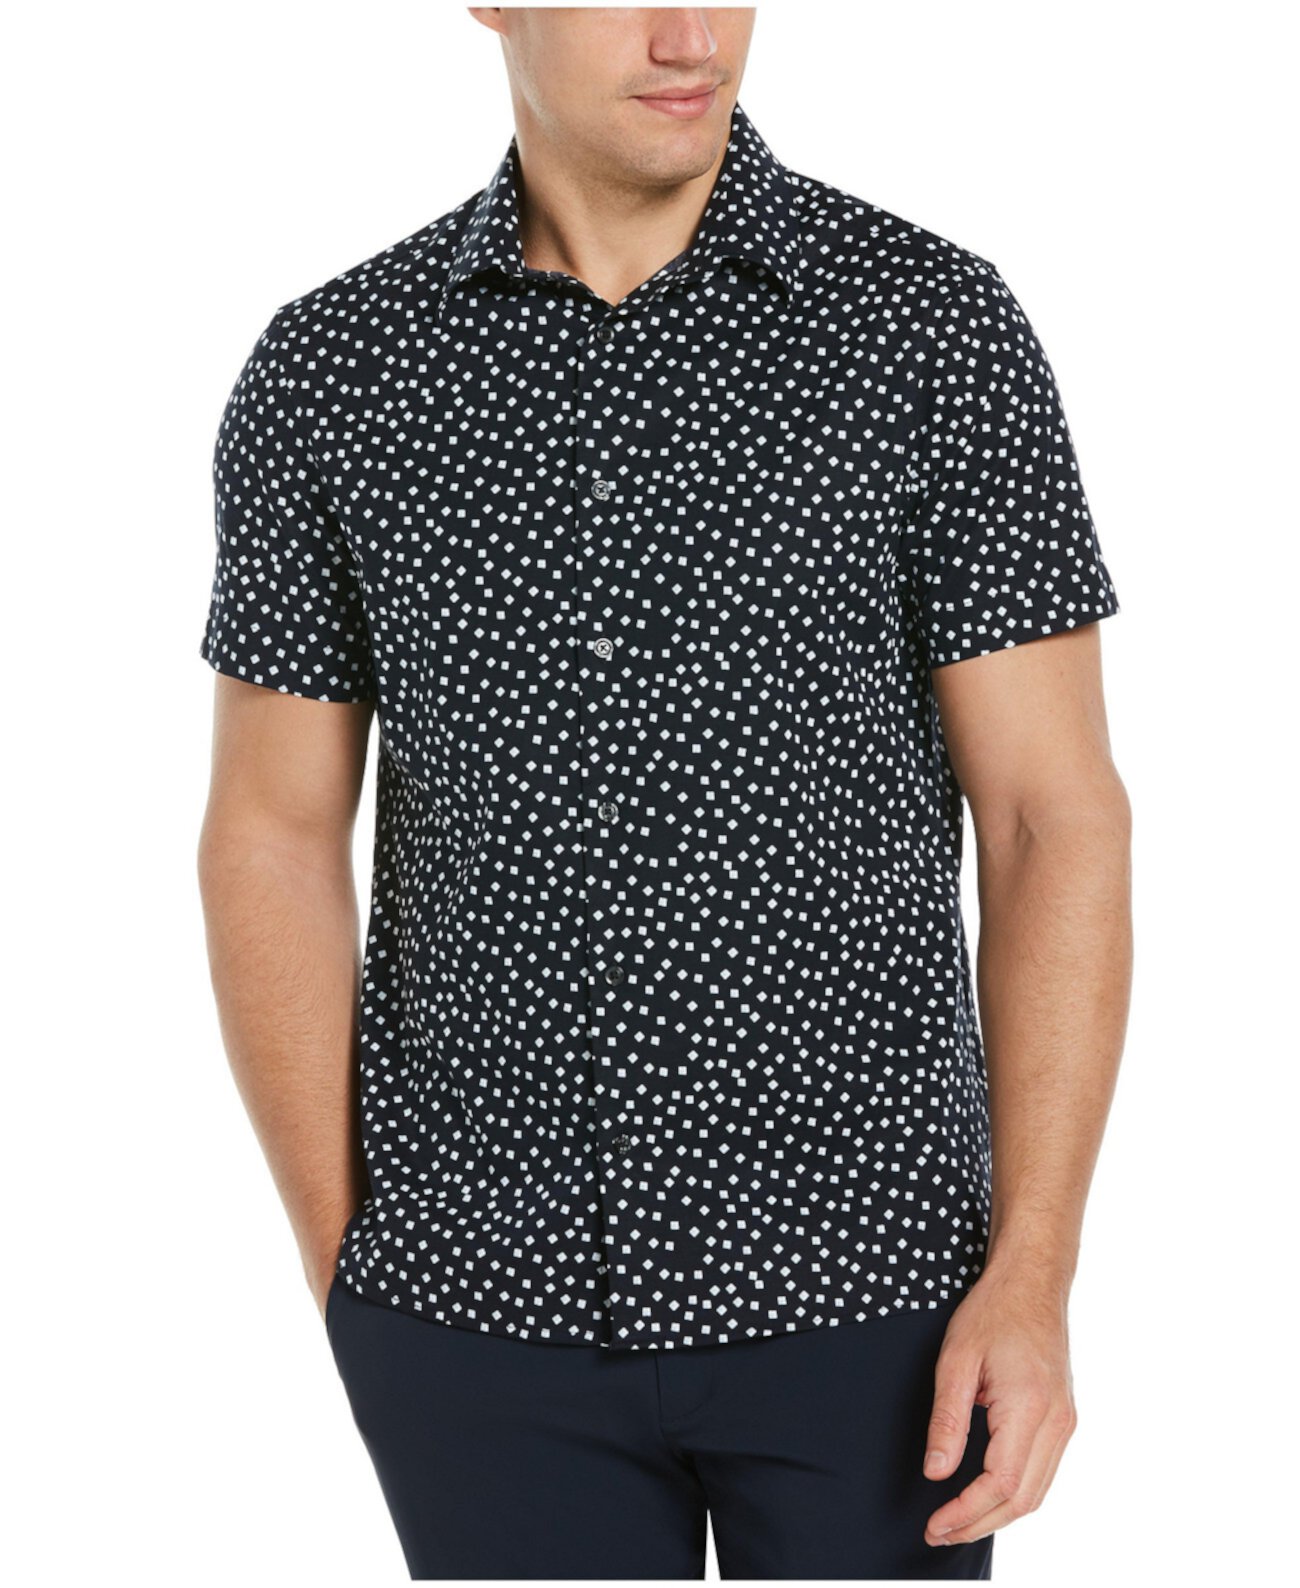 Мужская рубашка на пуговицах с коротким рукавом и принтом стрейч Micro Blocks Perry Ellis